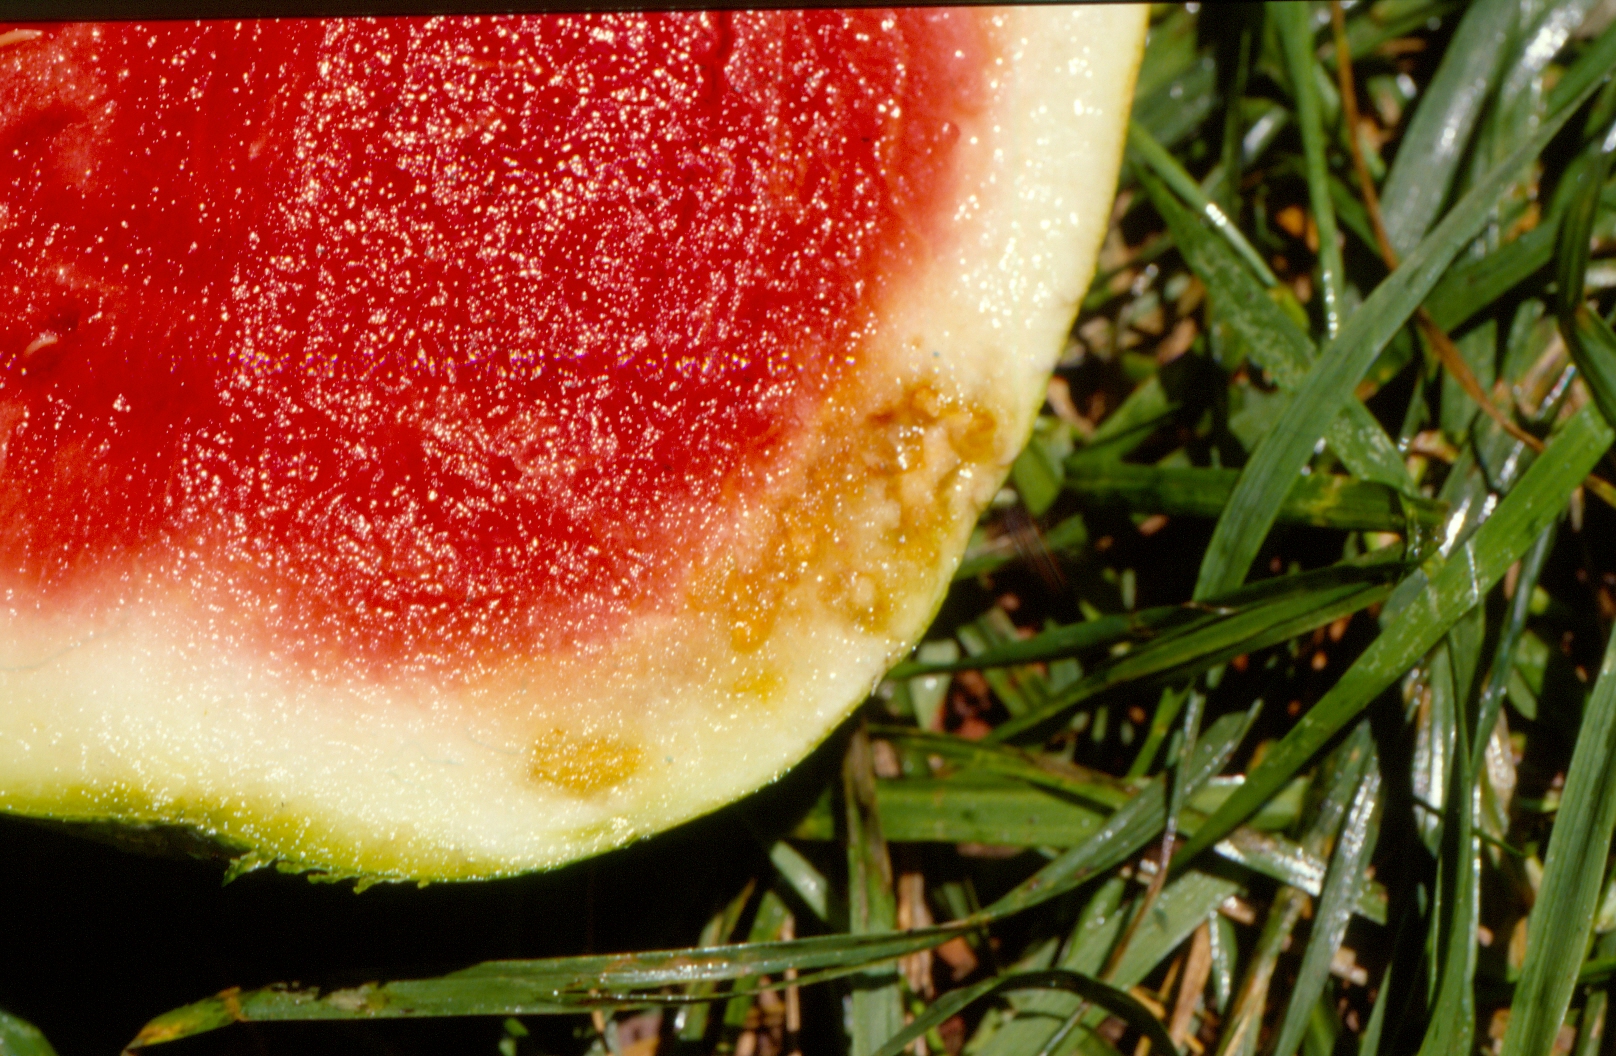 Figure 3. Rind necrosis of watermelon